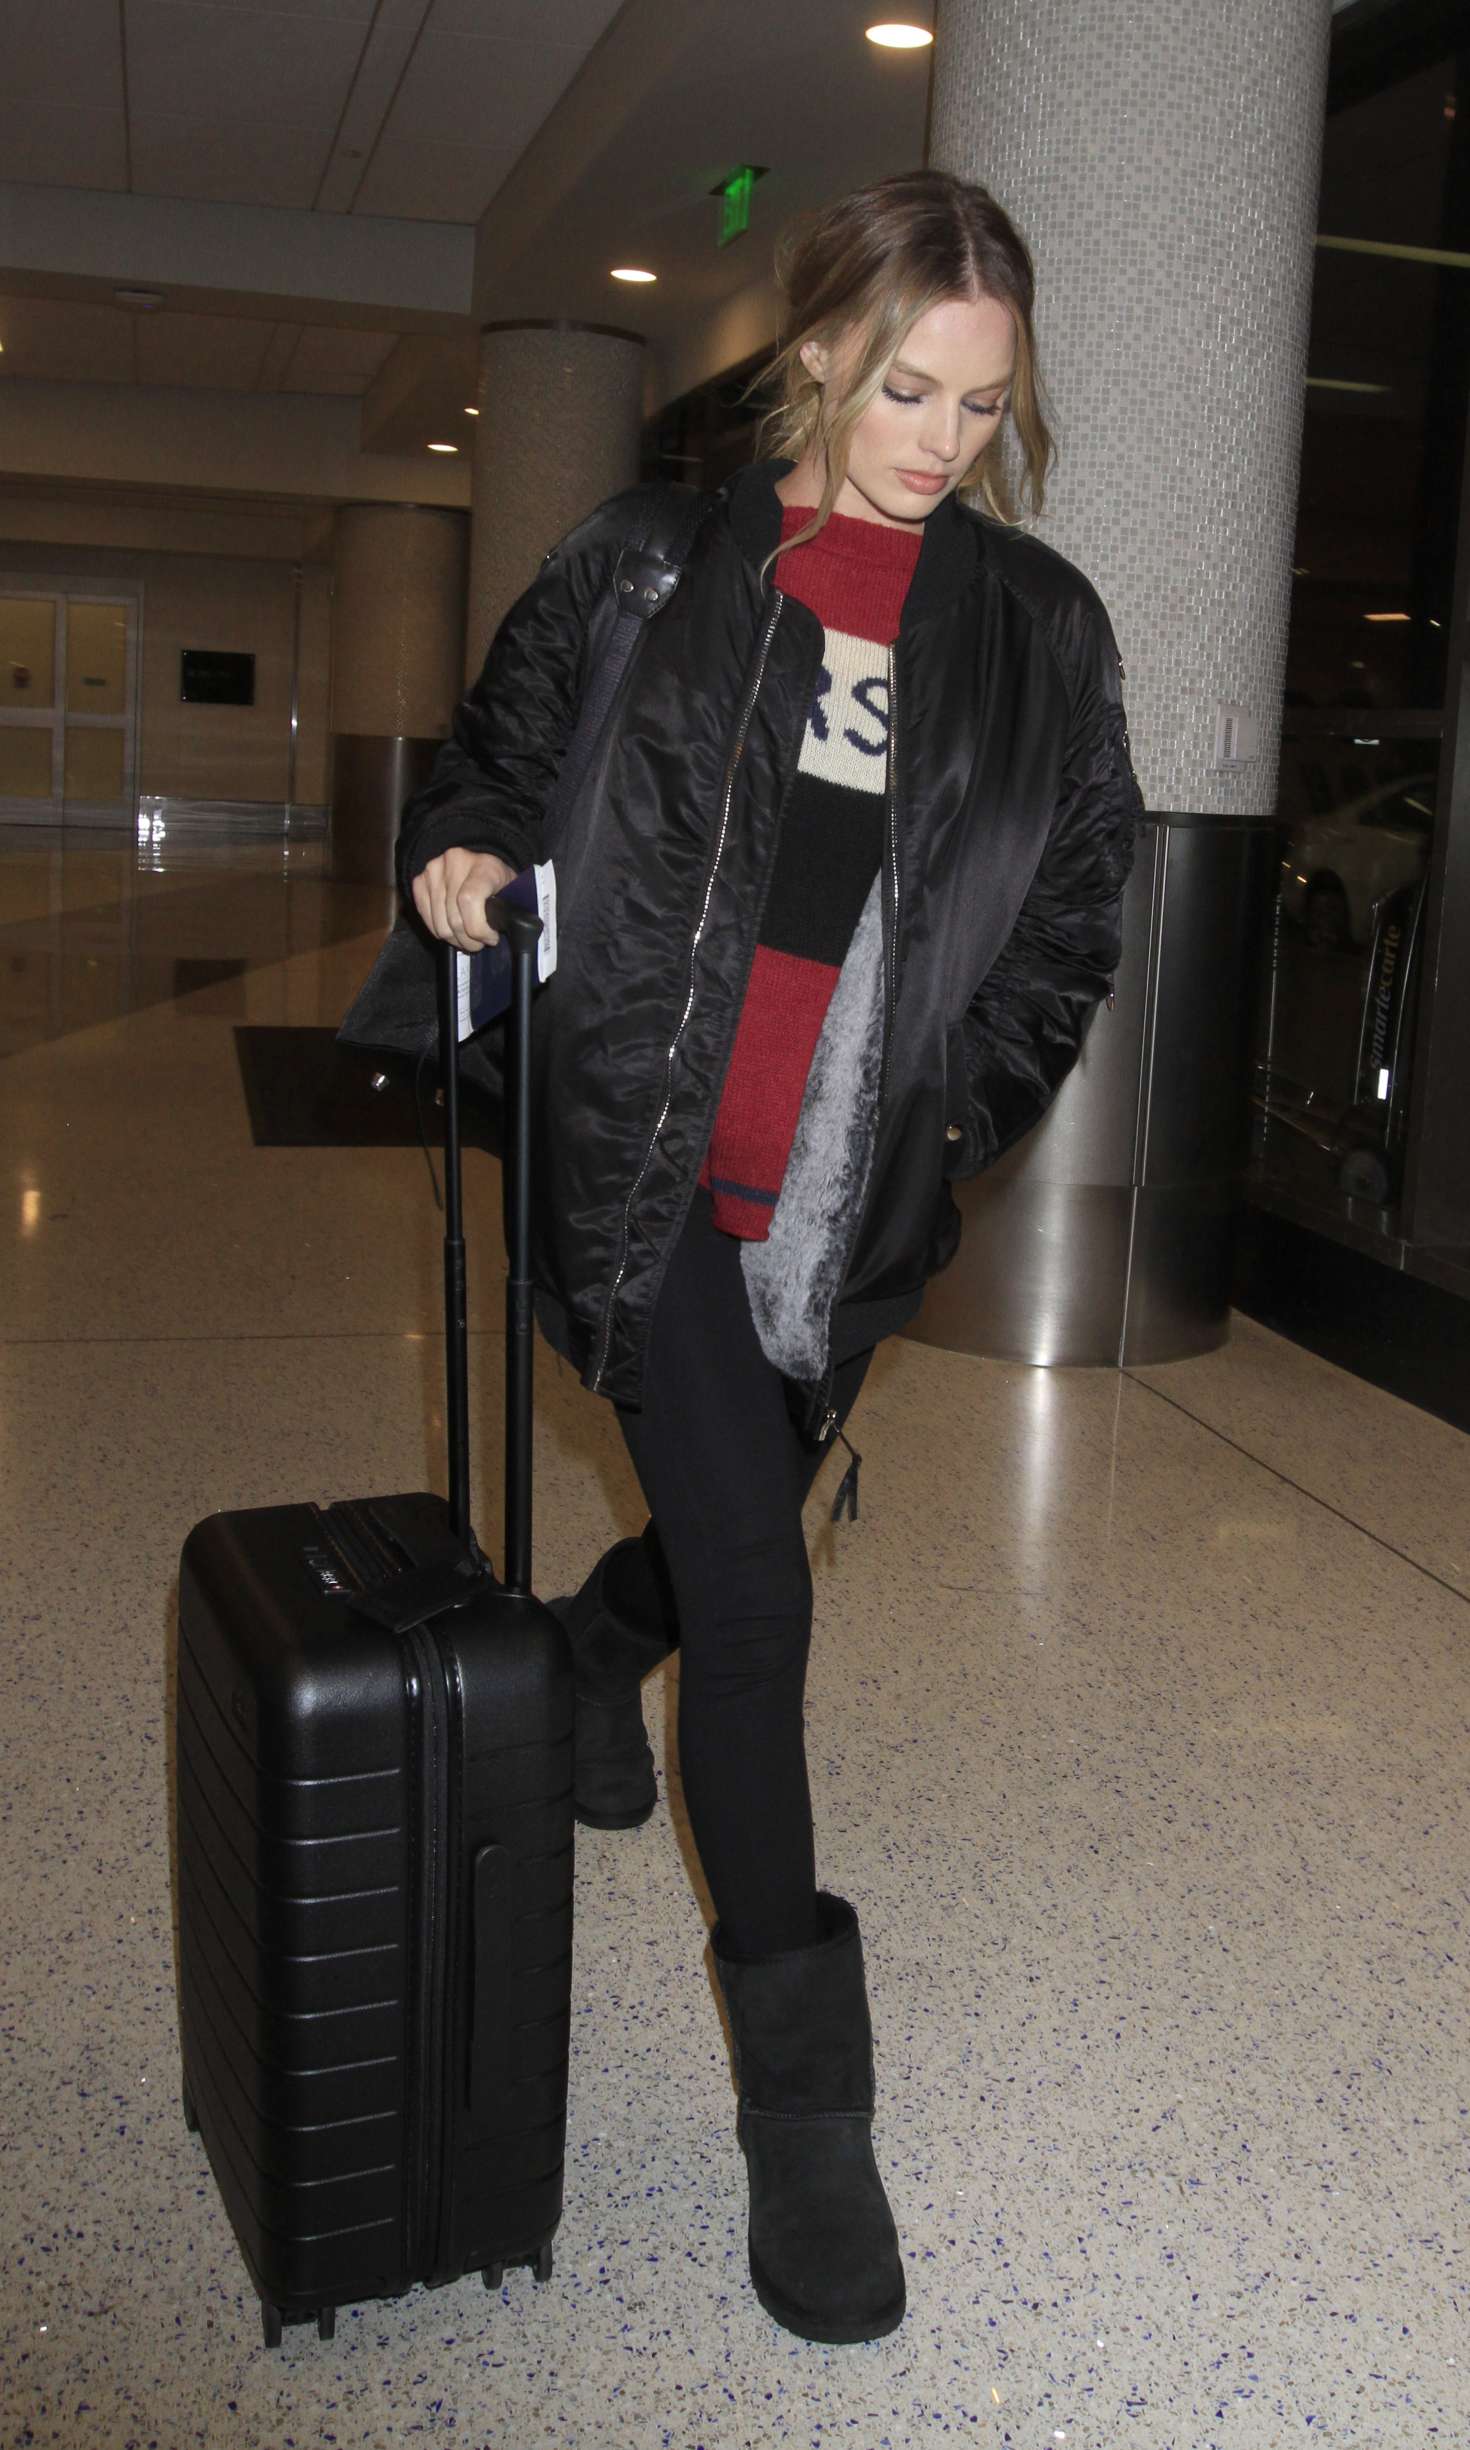 Margot Robbie at LAX Airport in LA